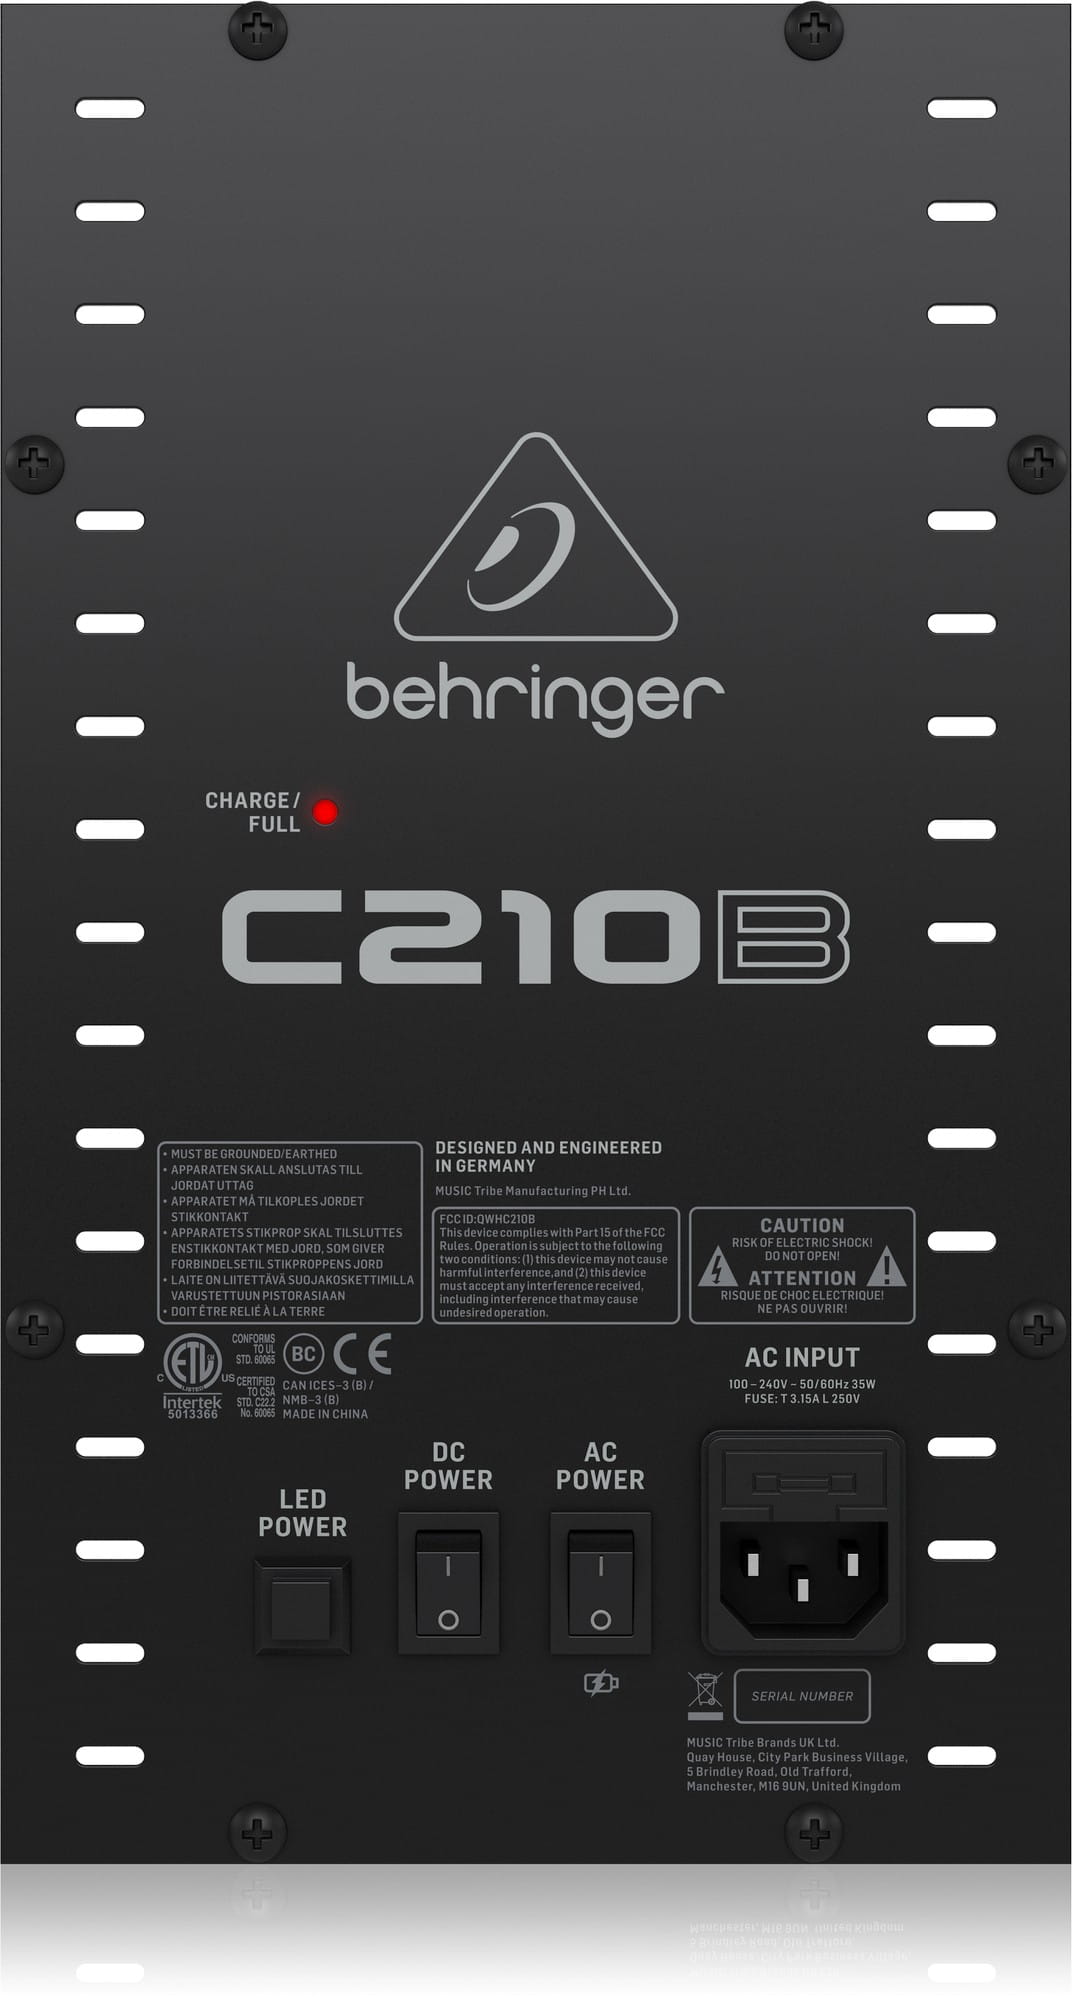 Behringer C210B